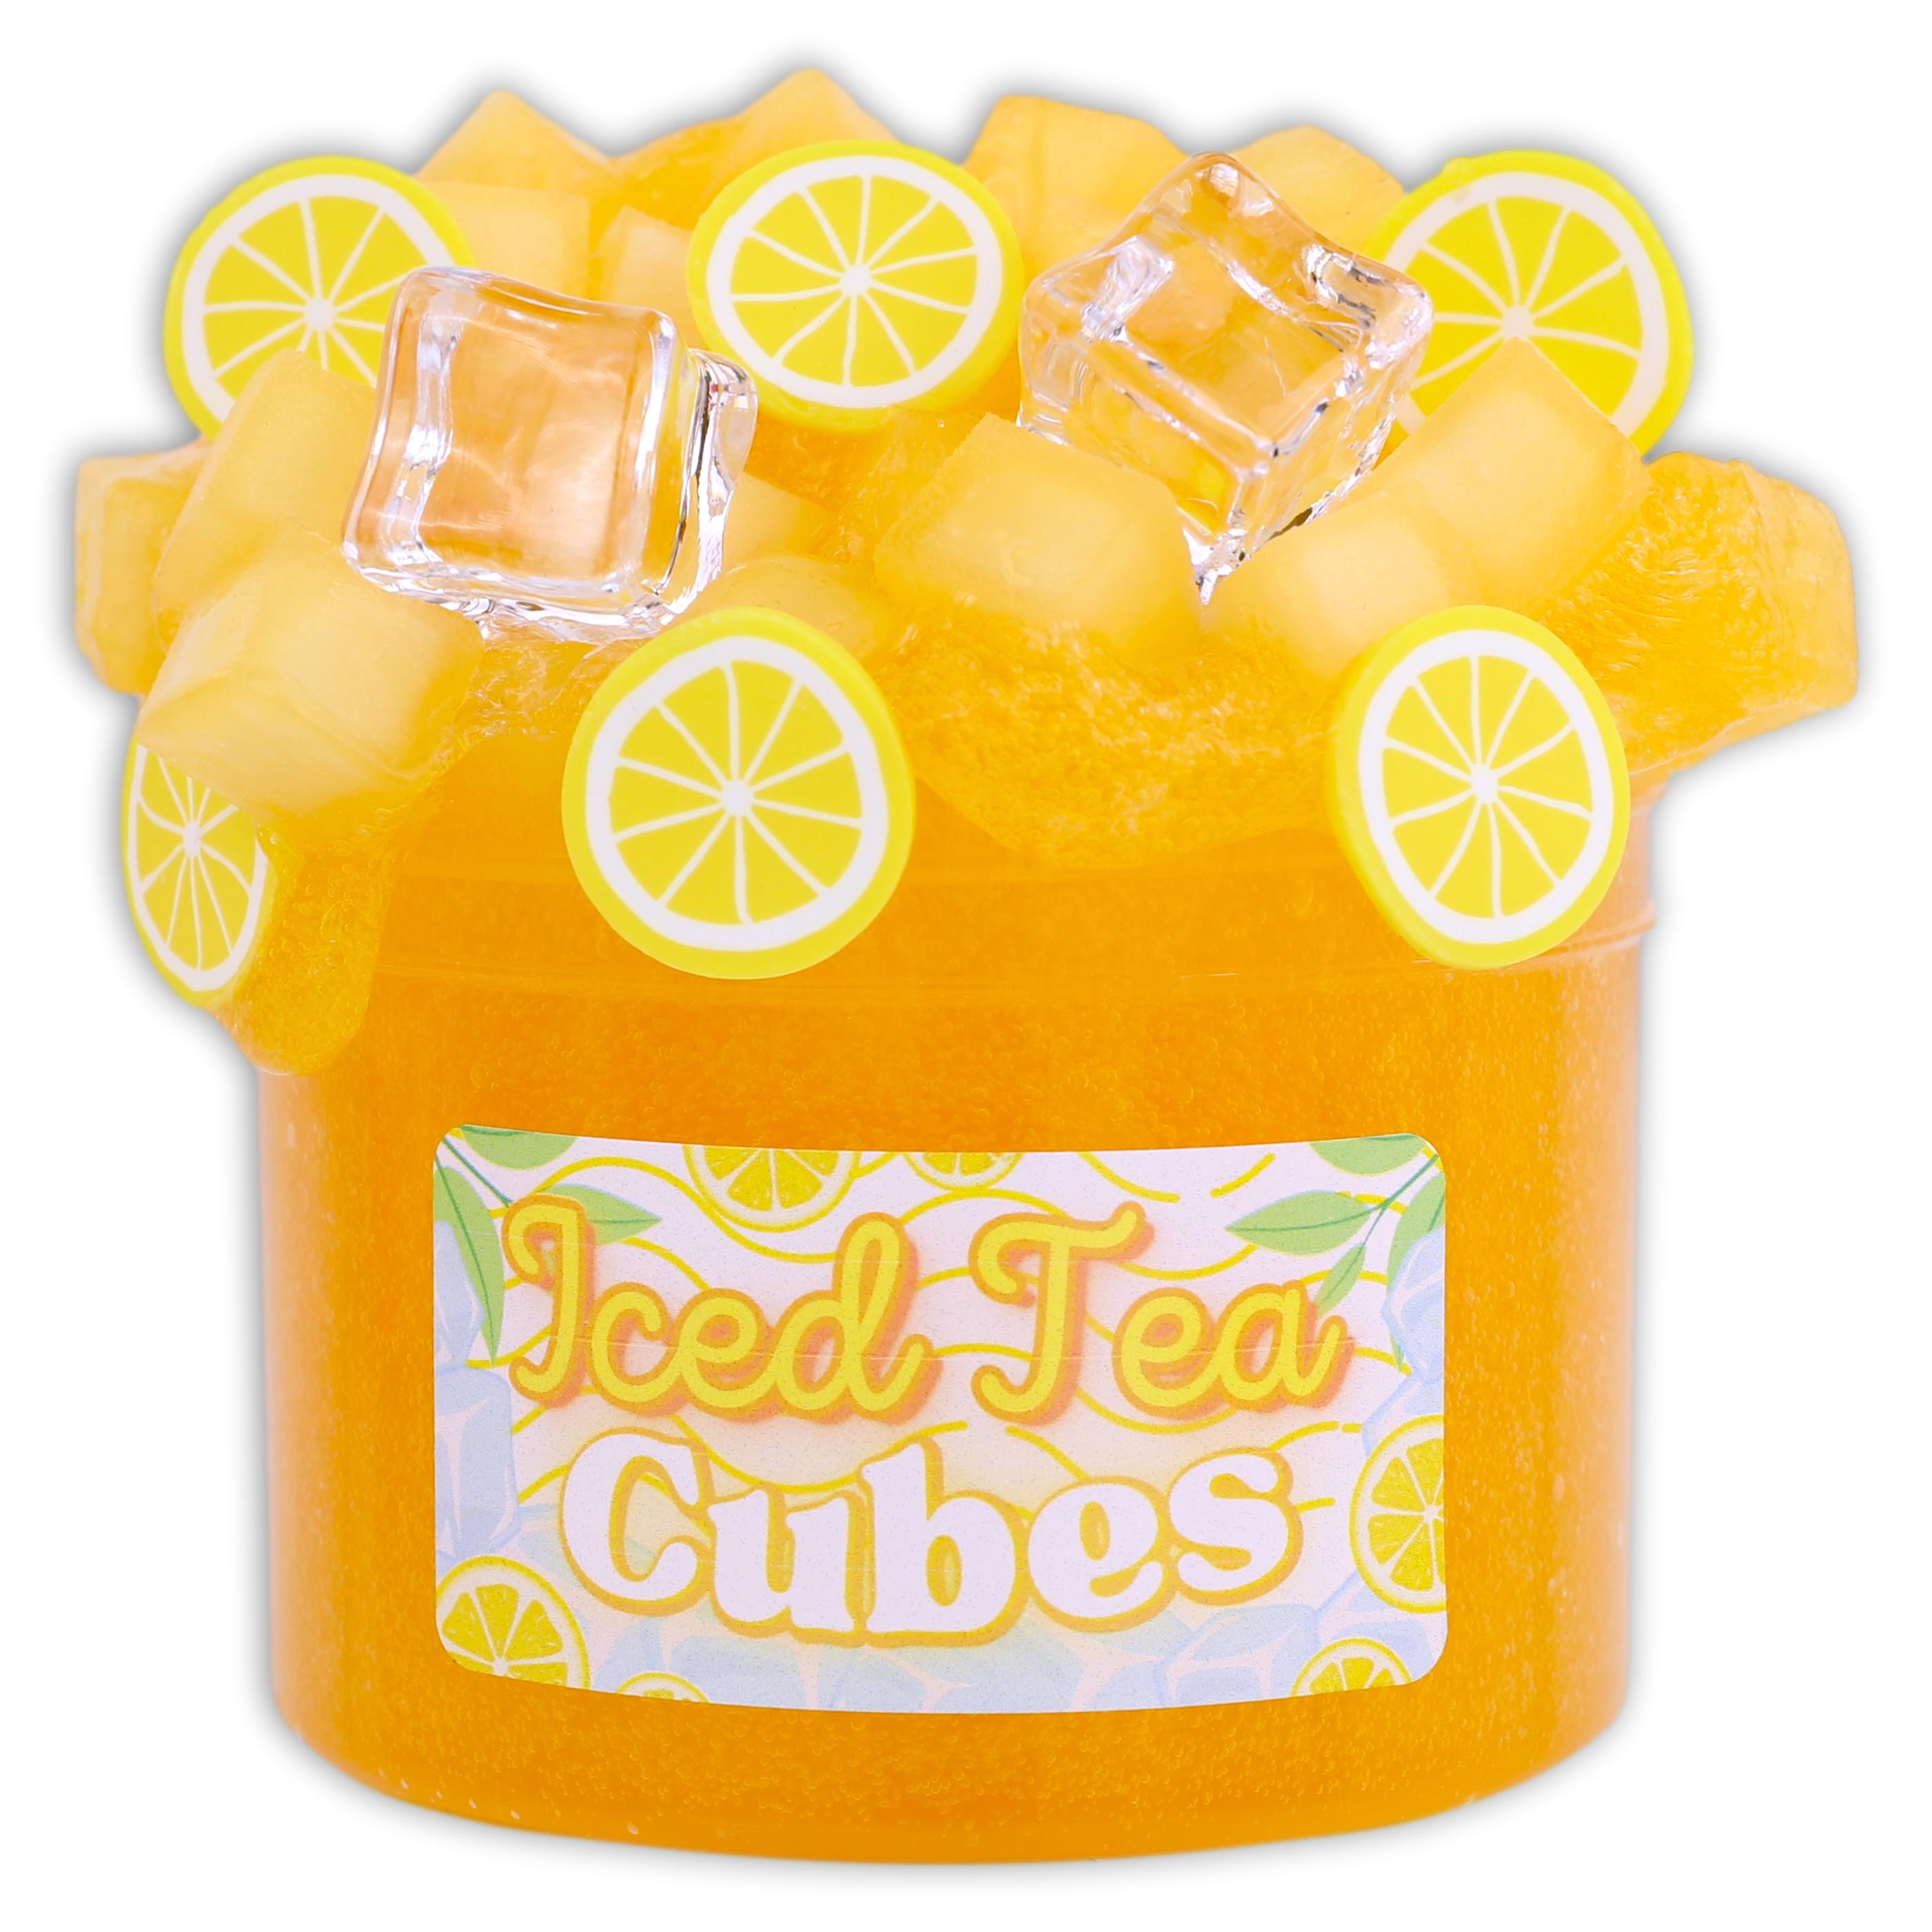 Nee Doh Nice Cube  Lemons and Slimes